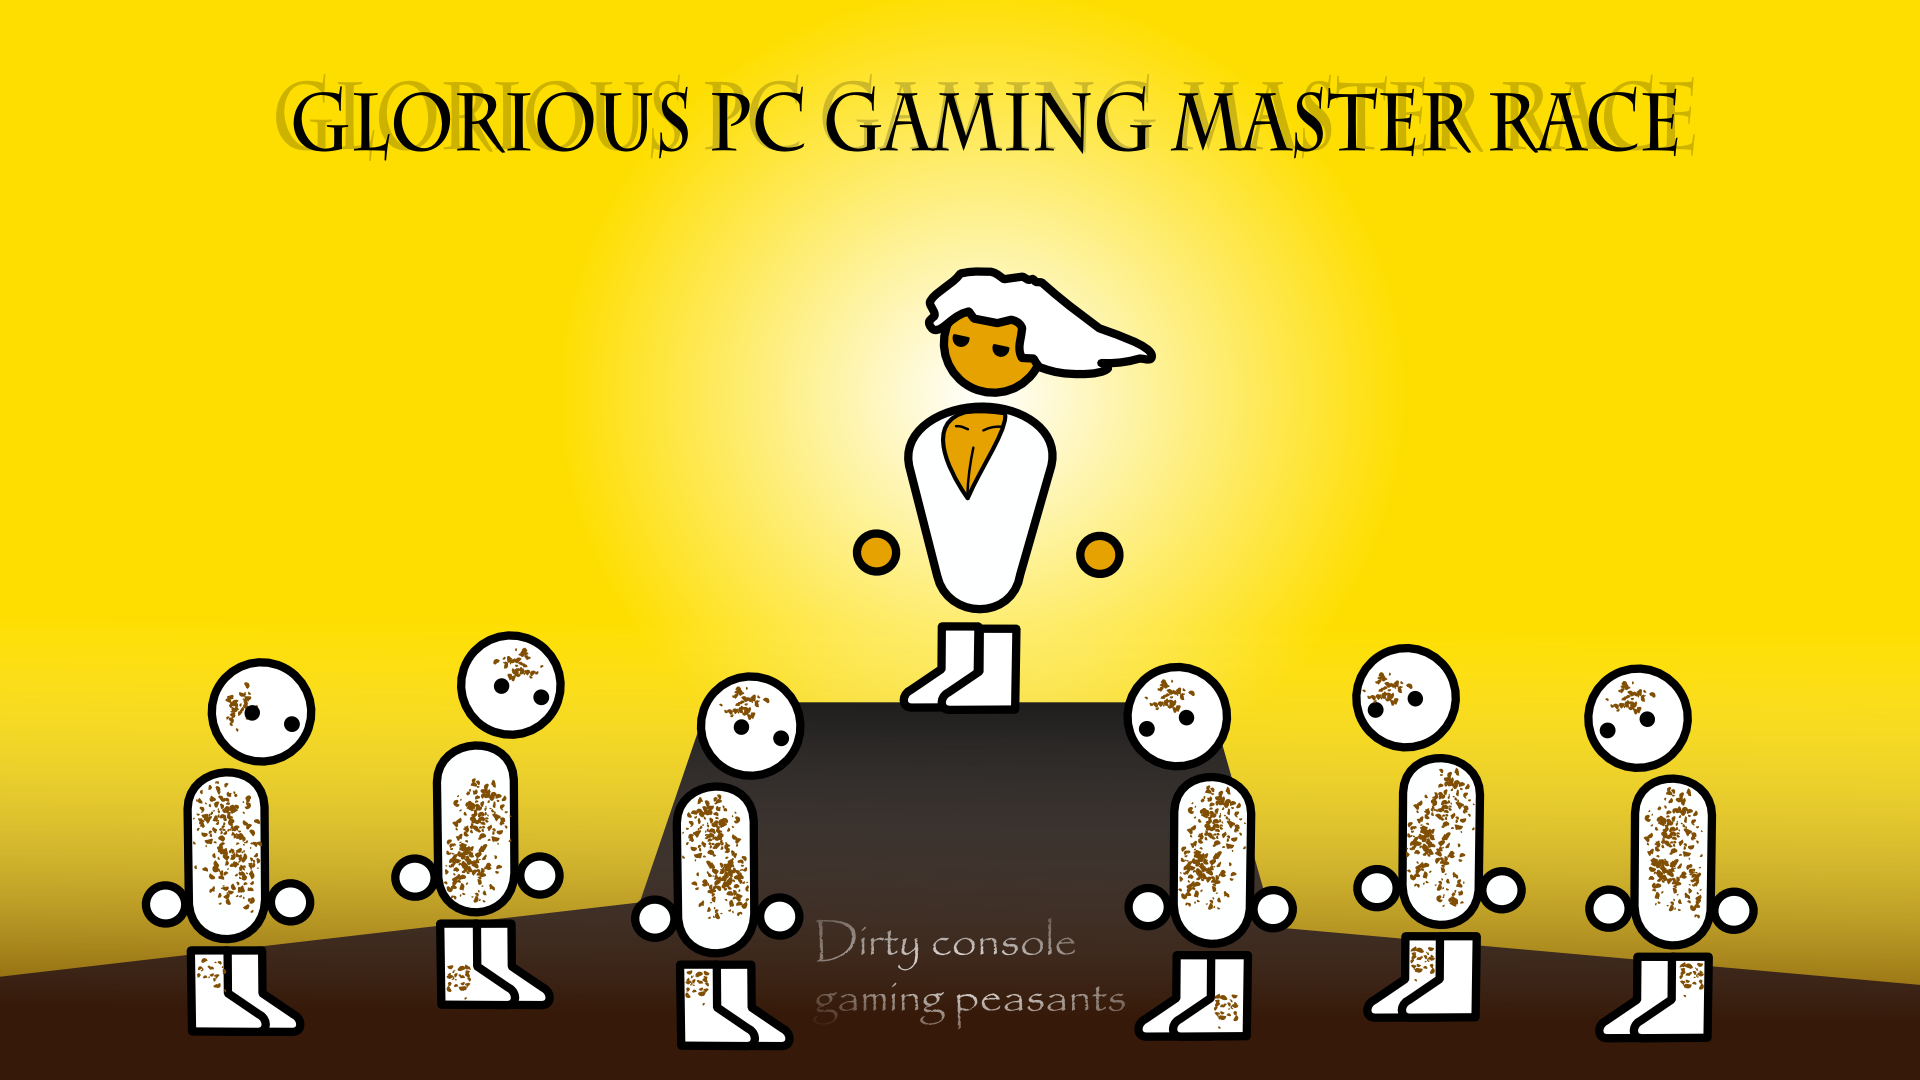 https://geekyantics.files.wordpress.com/2014/06/glorious-pc-gaming-master-race-comicvine.png